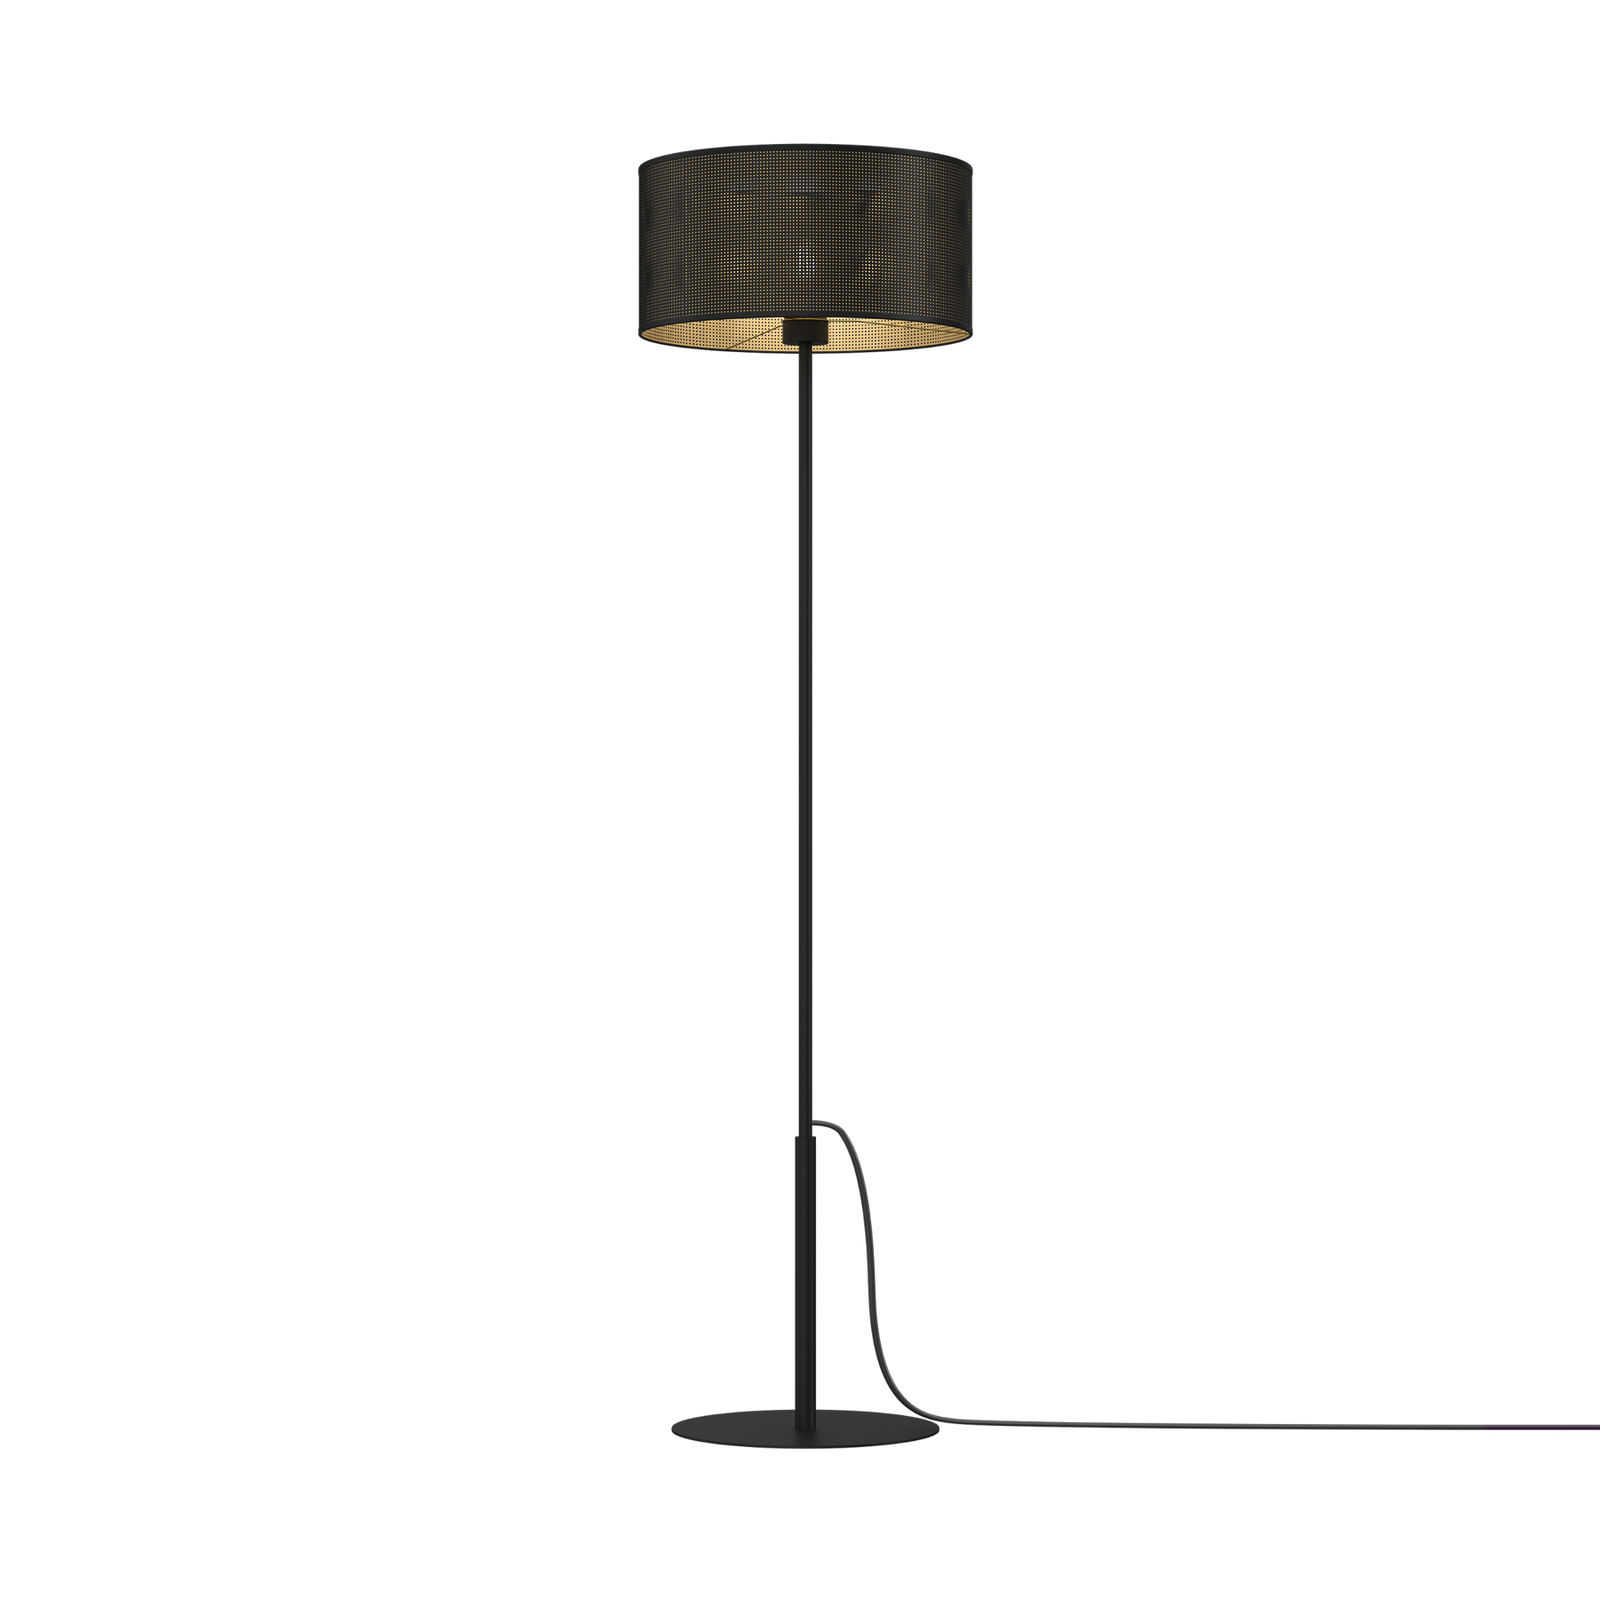 Jovin floor lamp, height 150 cm, black/gold